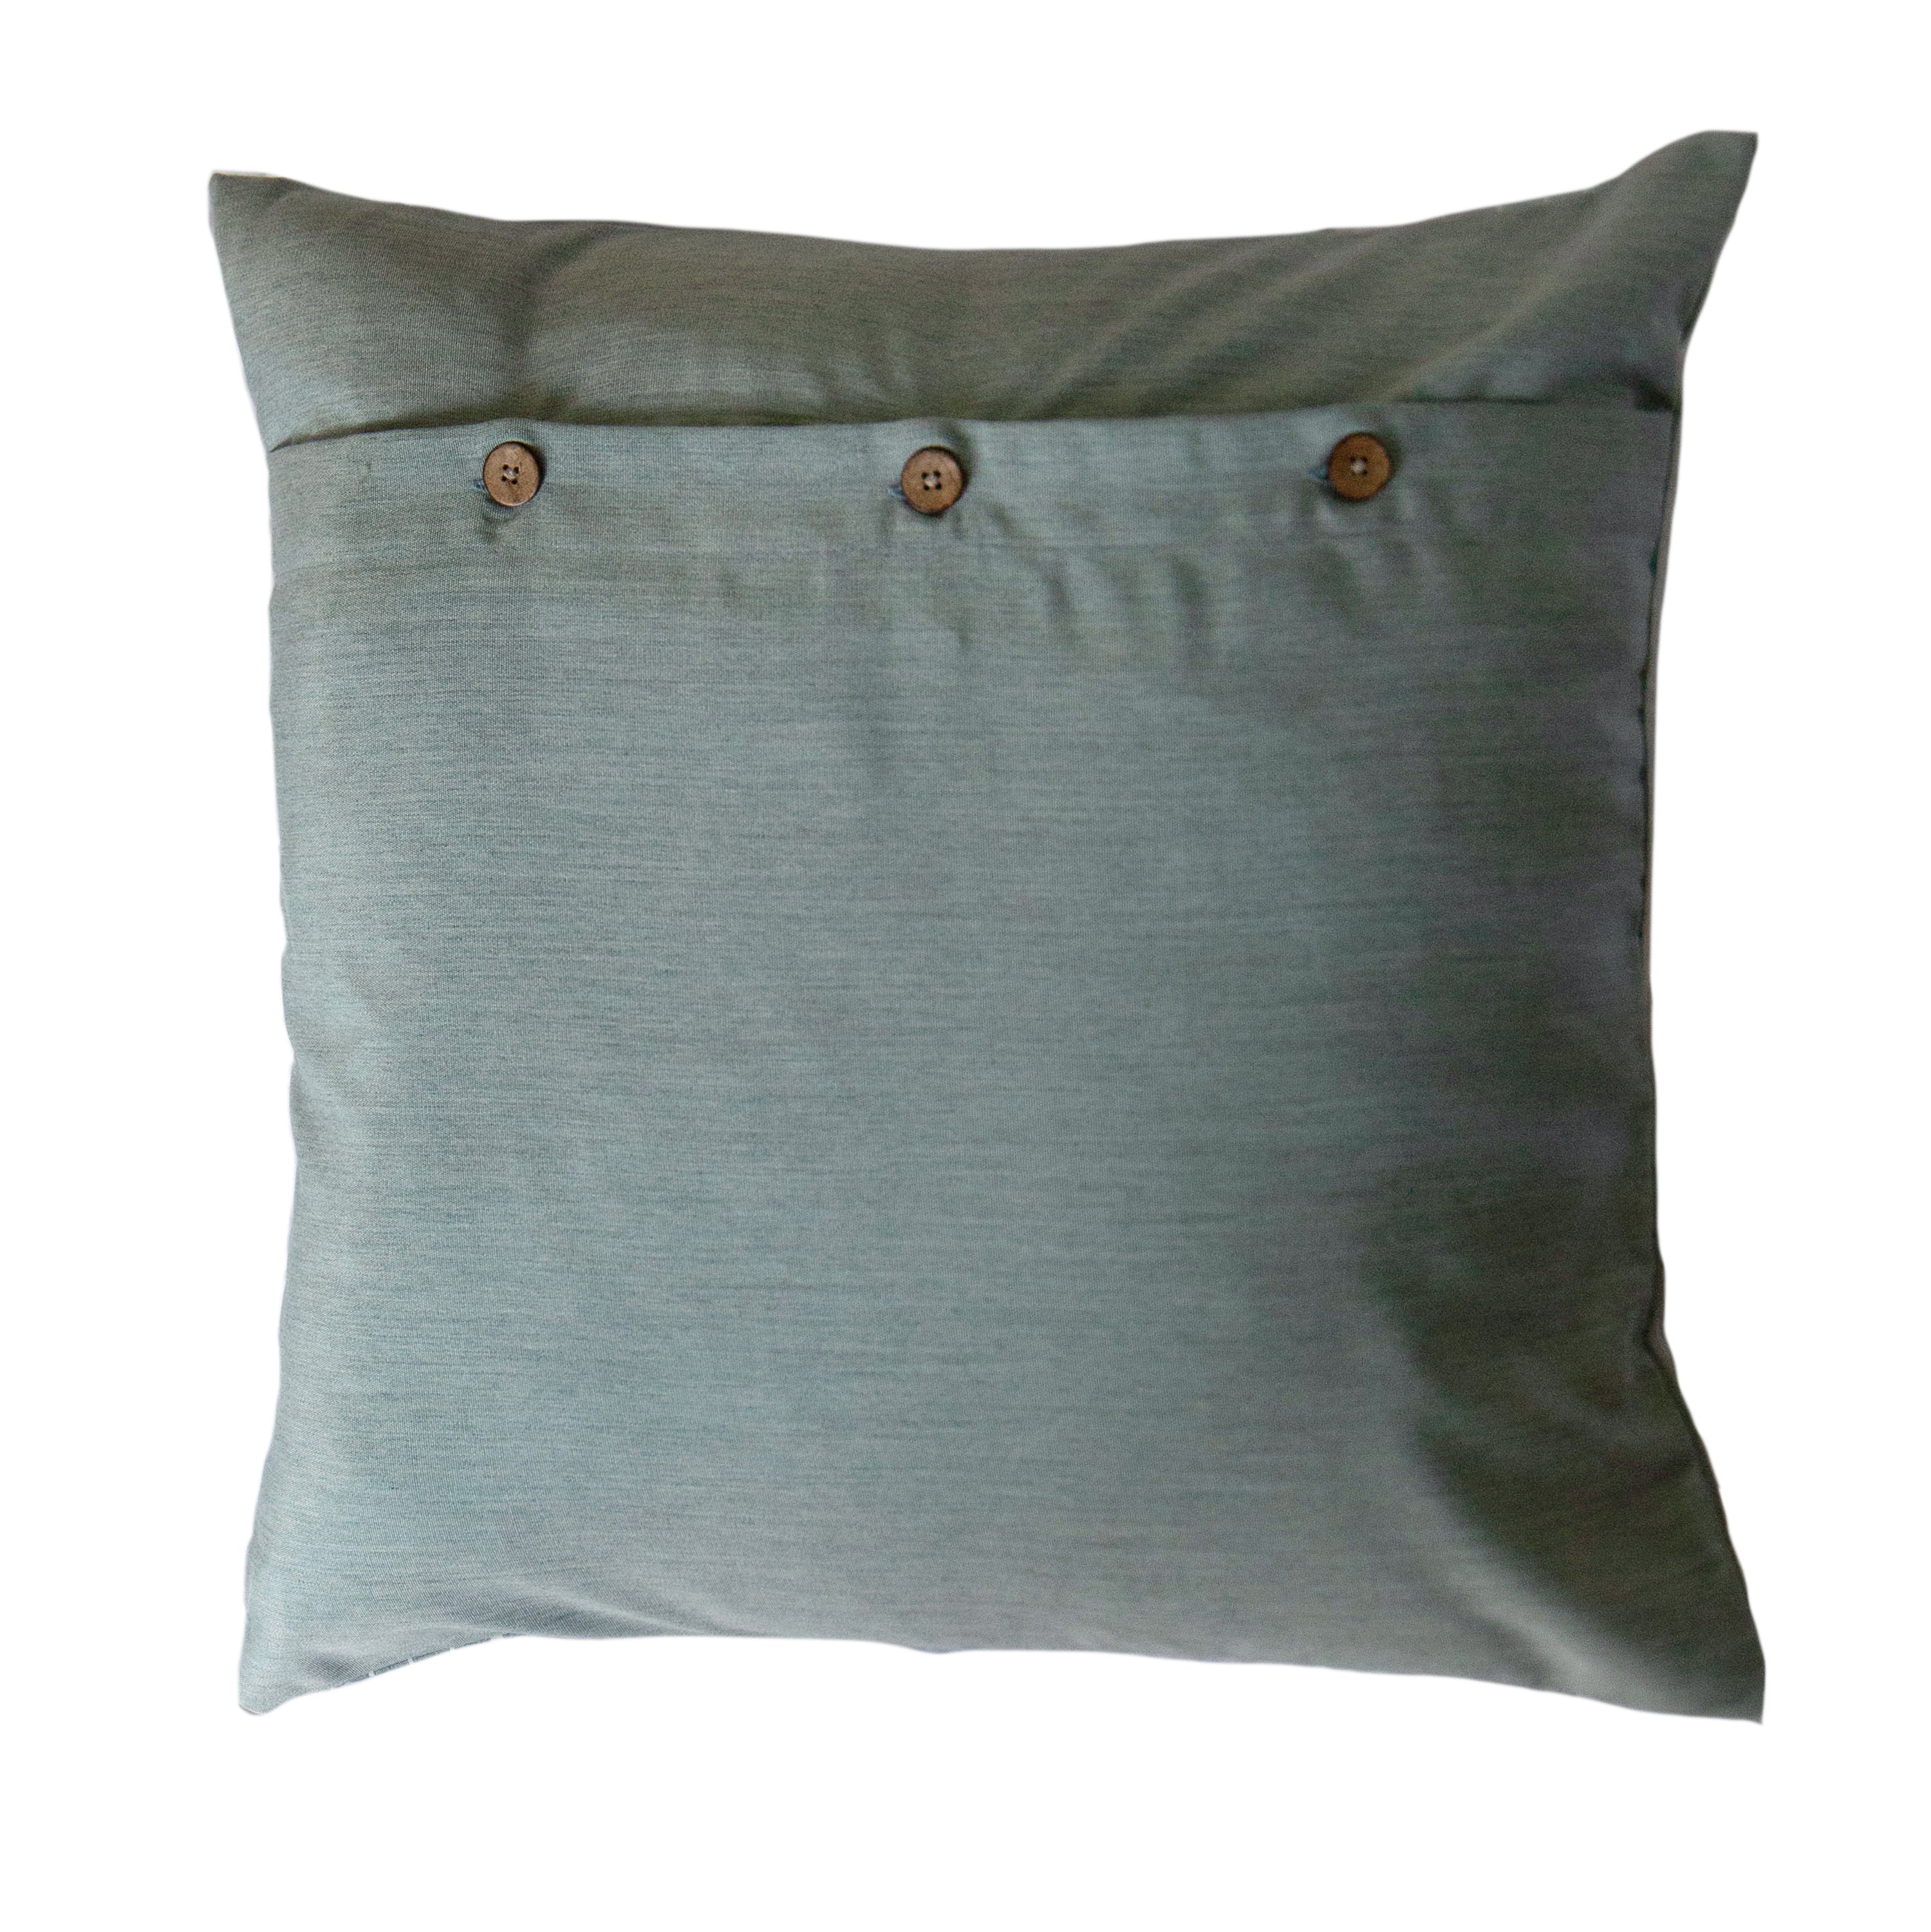 Bandhini Design House Outdoor Cushion 22 x 22 Inches / Grey Outdoor Cloud Stripe Lounge Cushion 55 x 55 cm